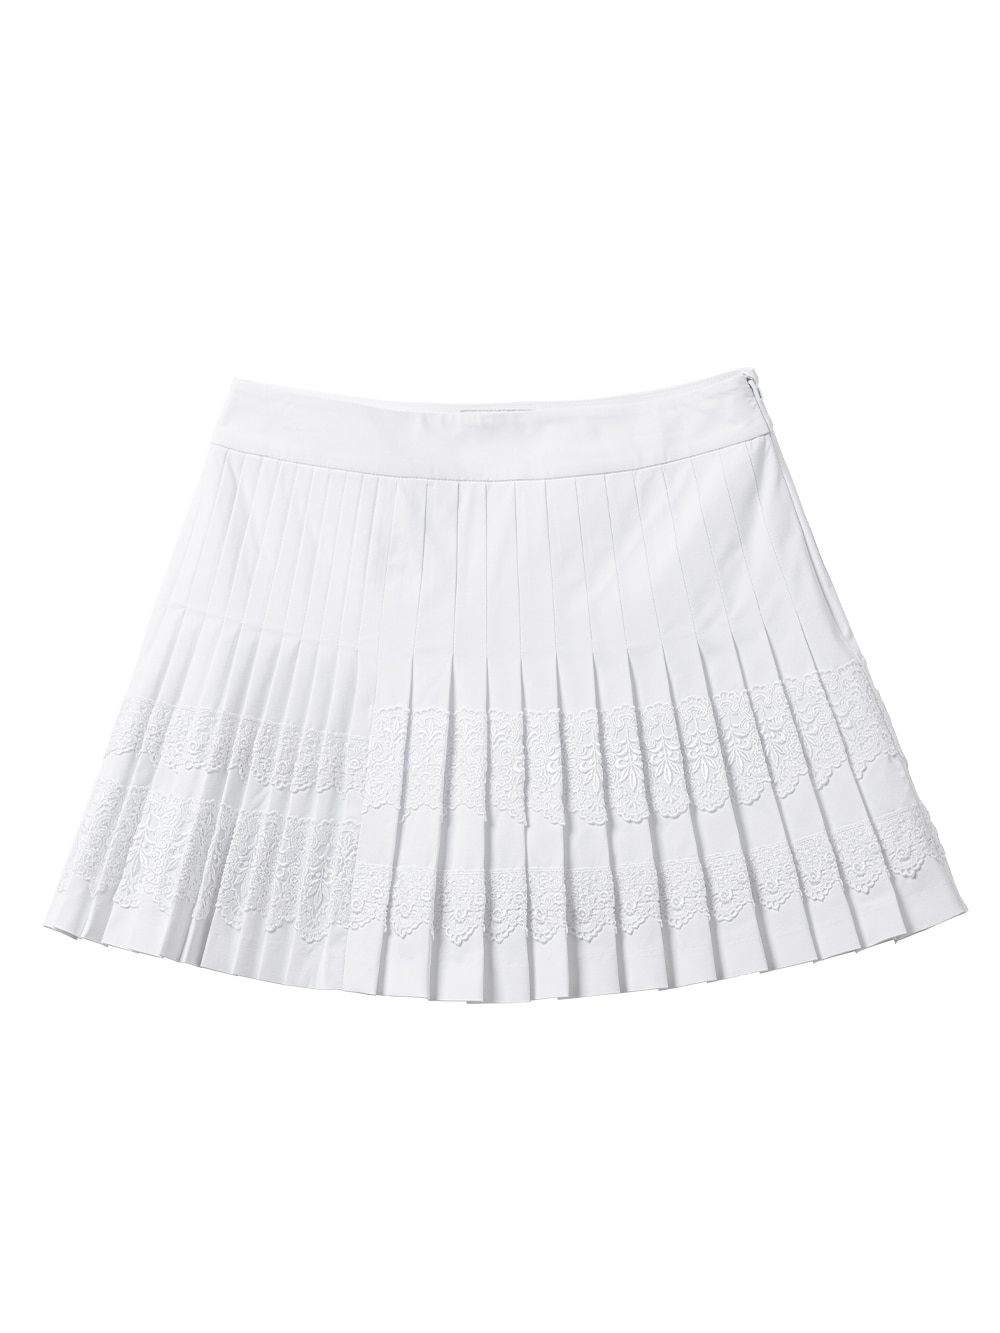 UTAA Lace Flare Skirt : White (UA2SKF220WH)_